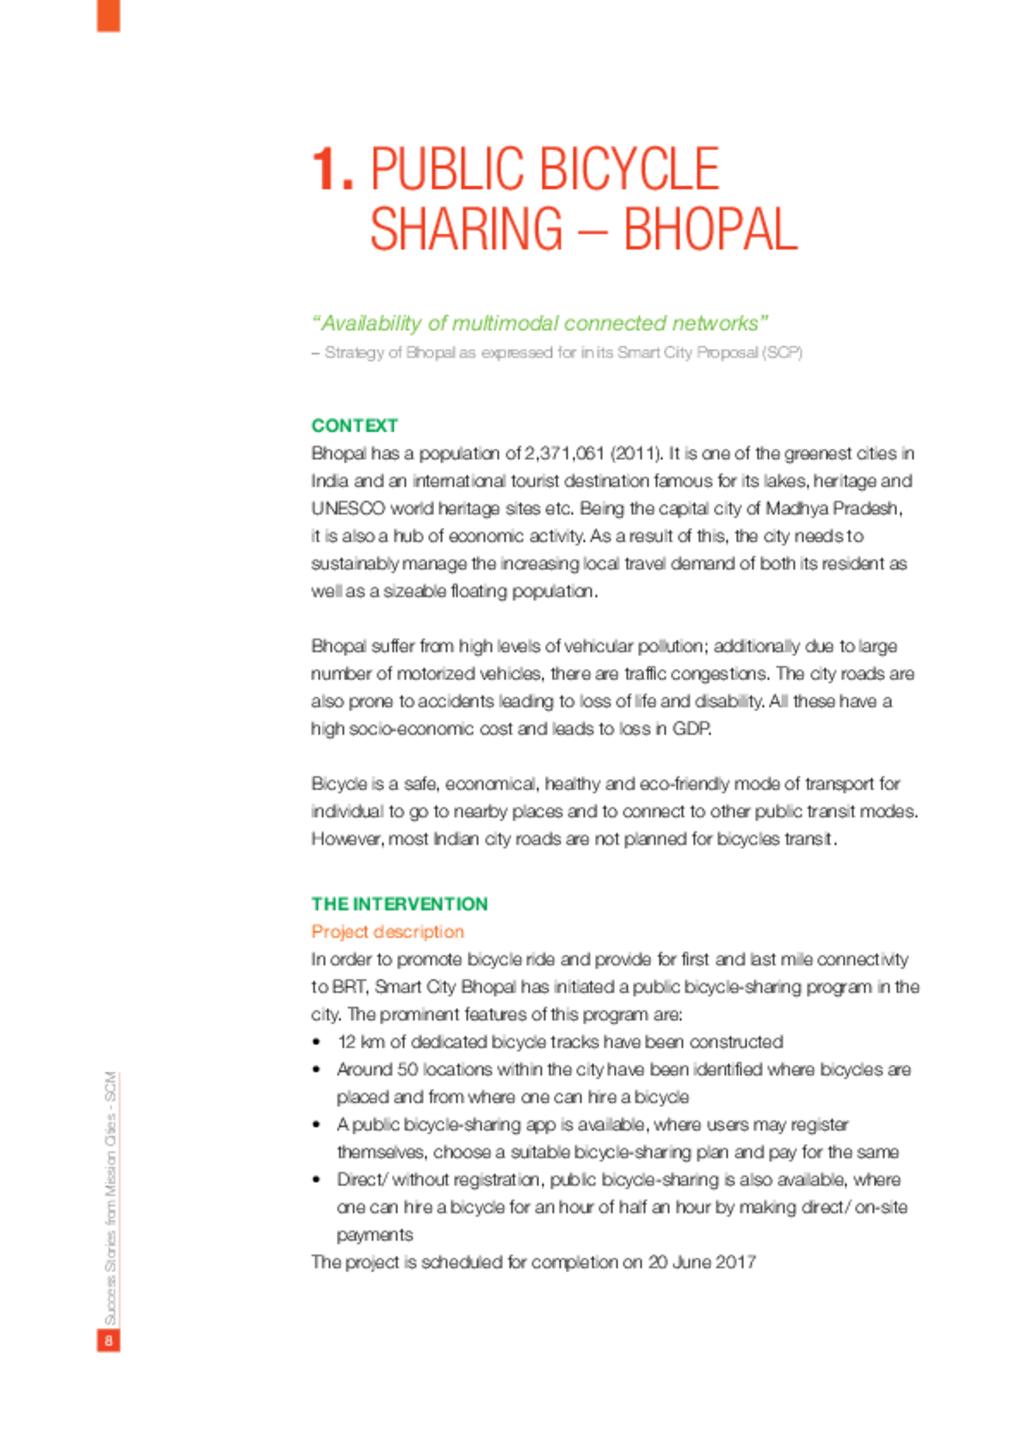 Public Bicycle Sharing - Bhopal